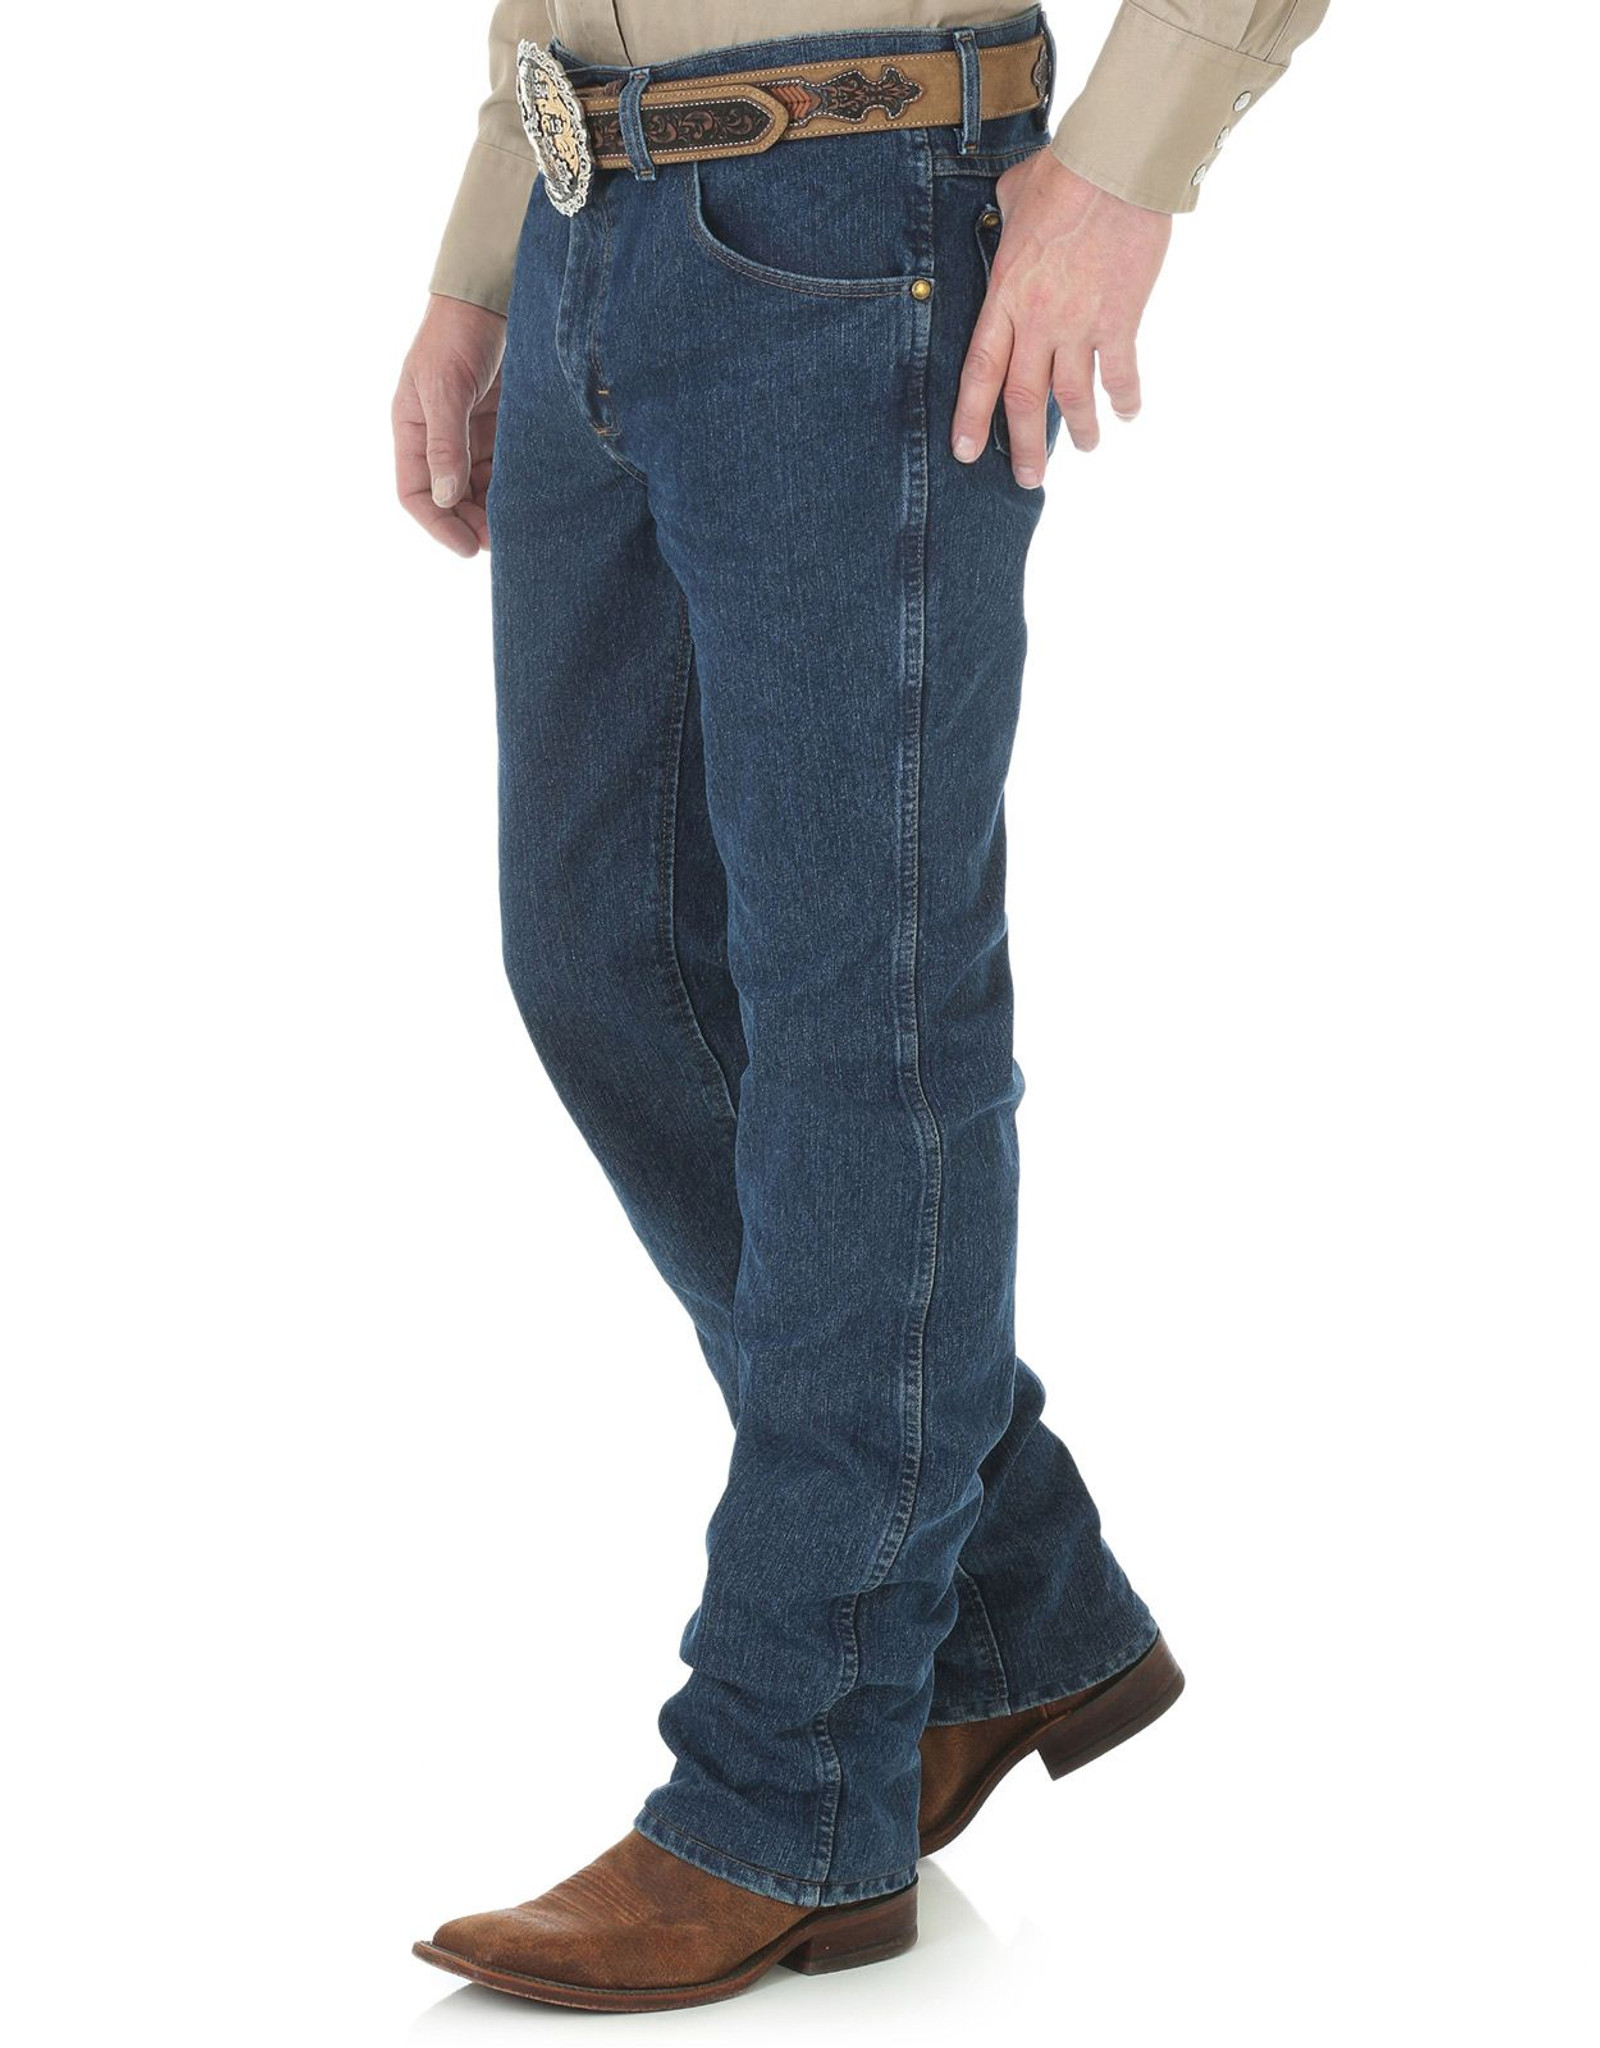 Wrangler Men's 36MACMS Jeans from Langston's - Mid Stone